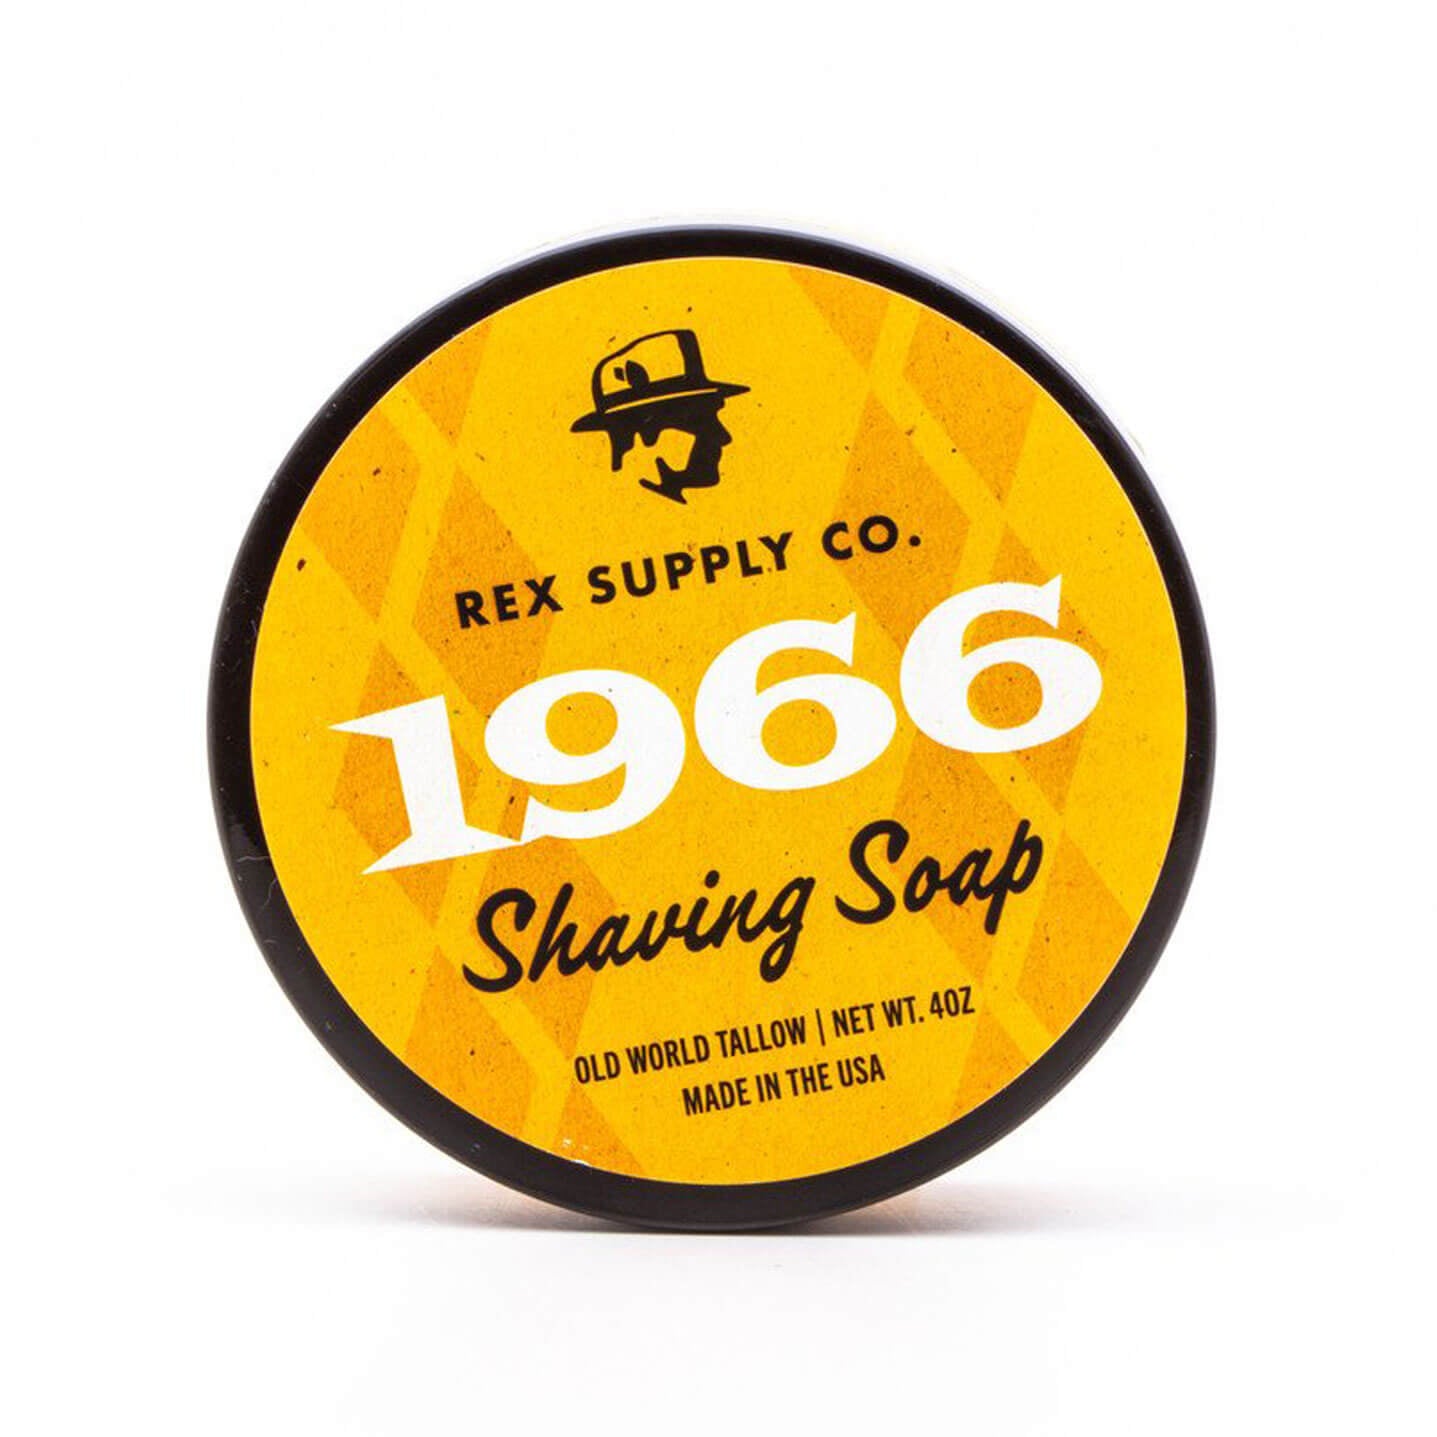 Rex 1966 Shaving Soap